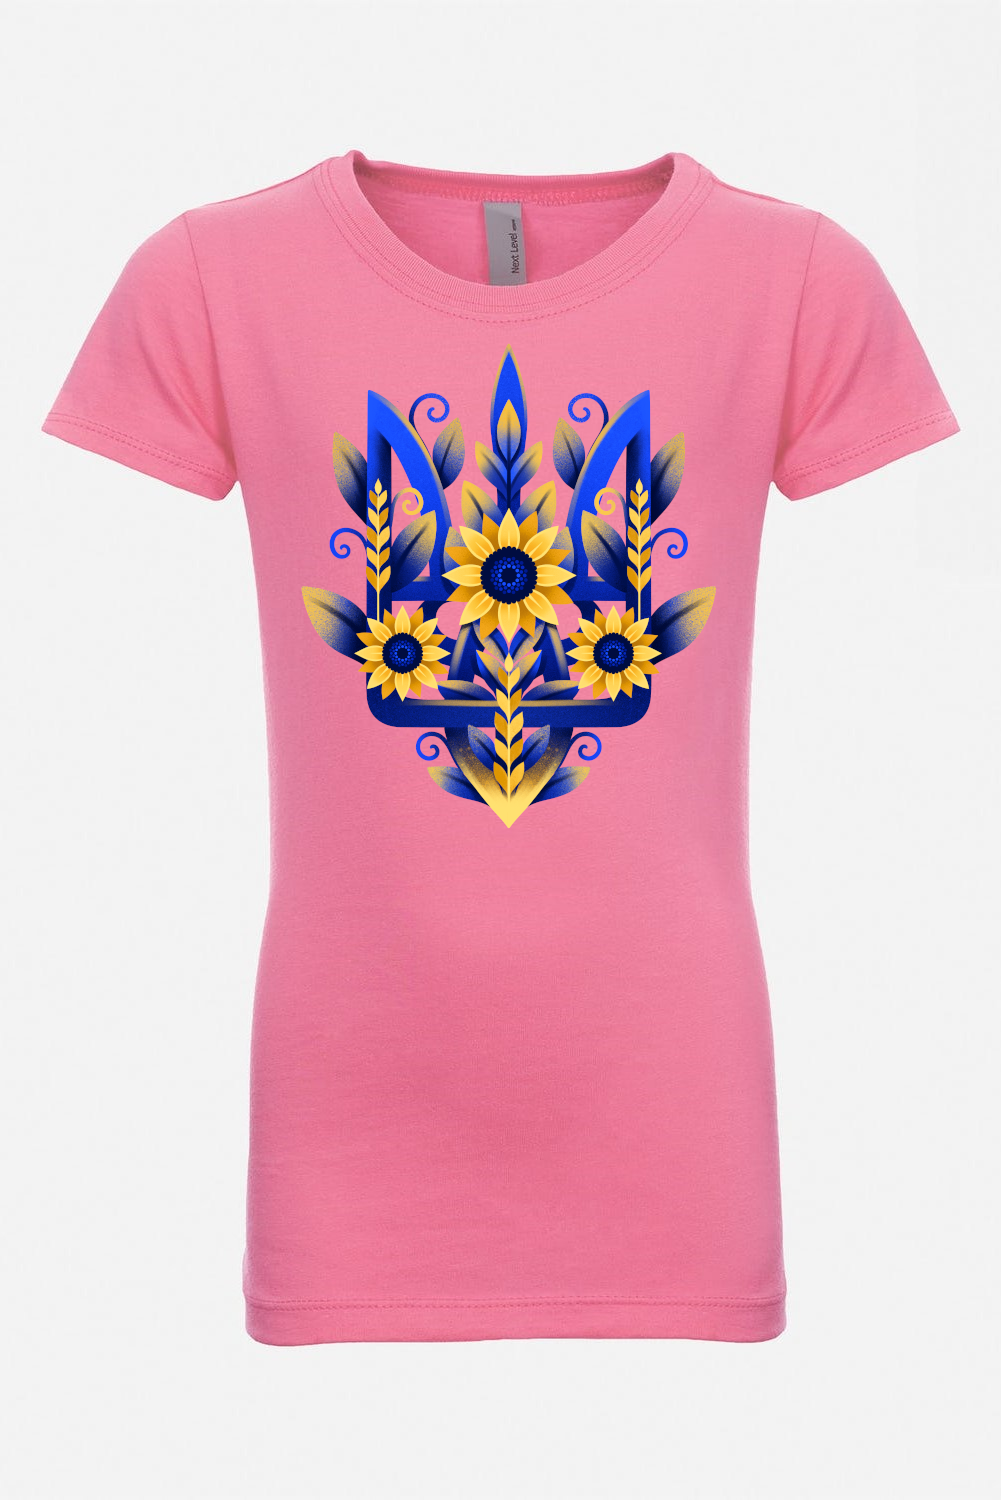 Girl's t-shirt "Sunflower Tryzub"